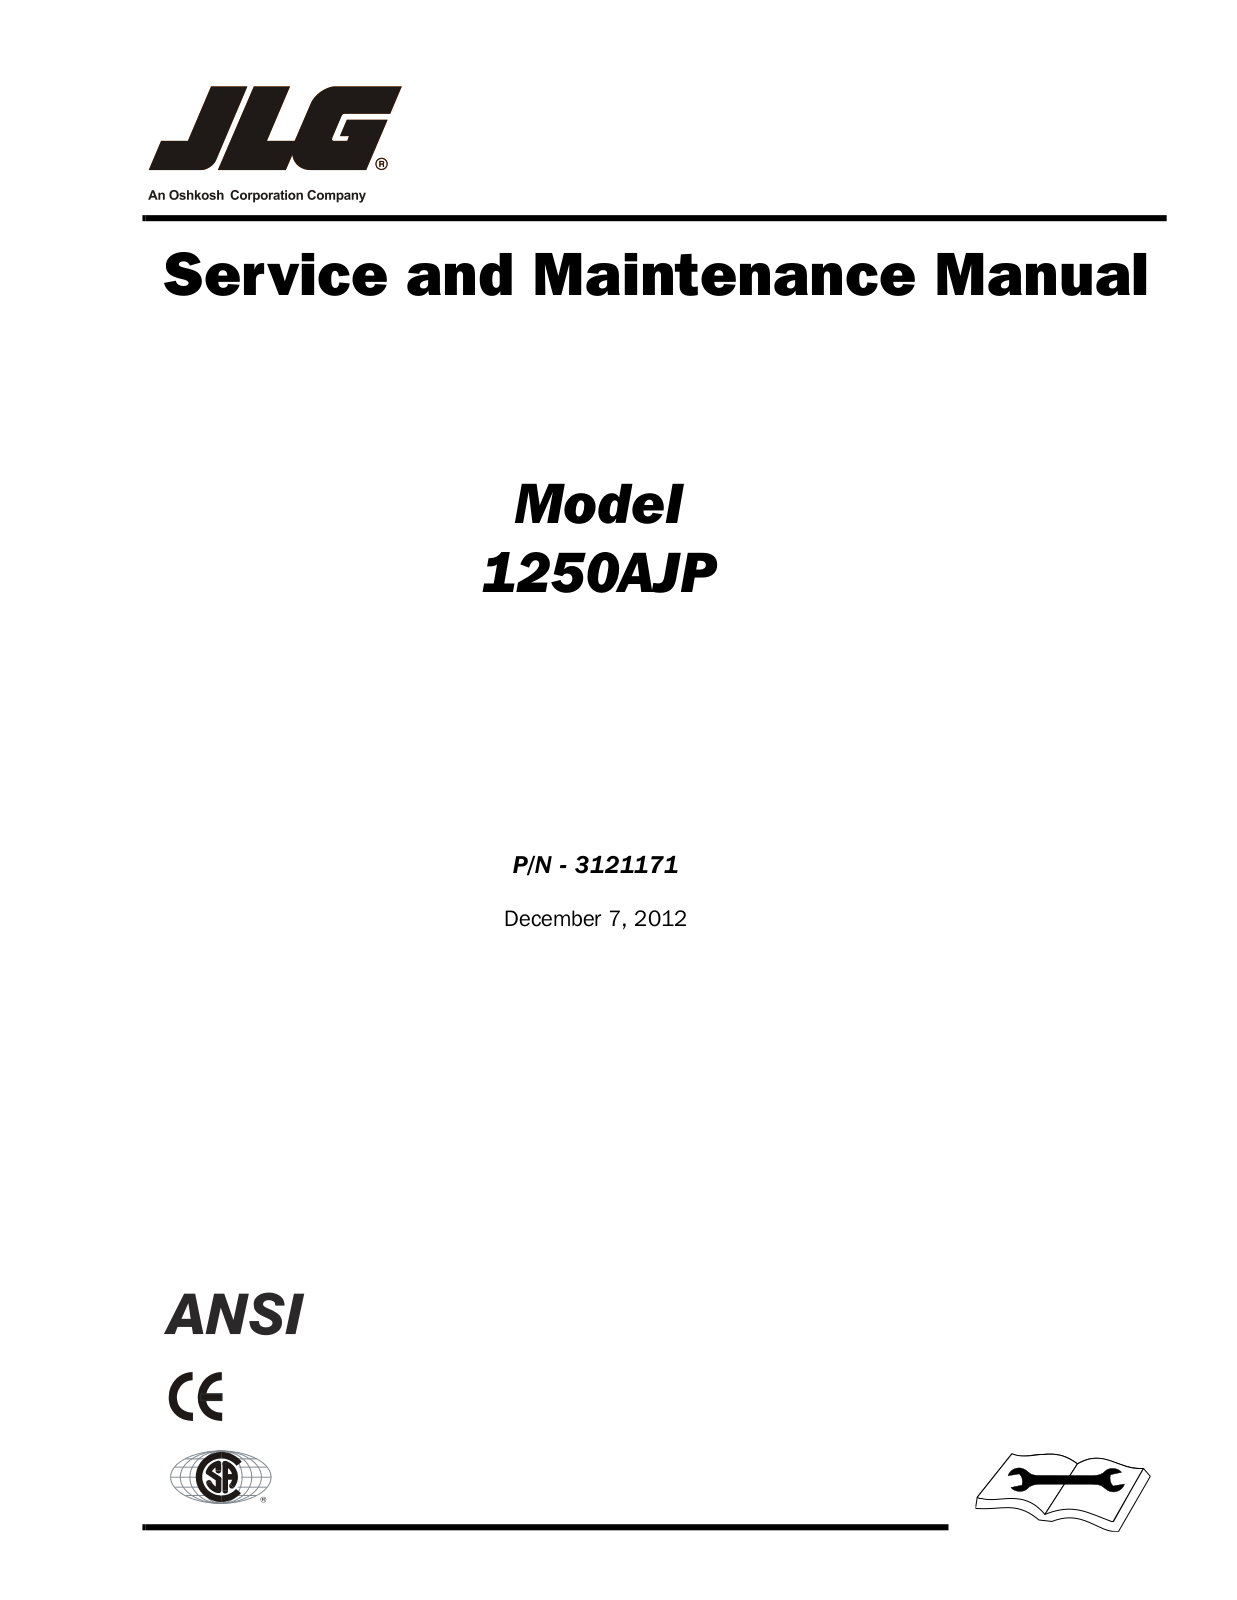 JLG 1250AJP Service Manual